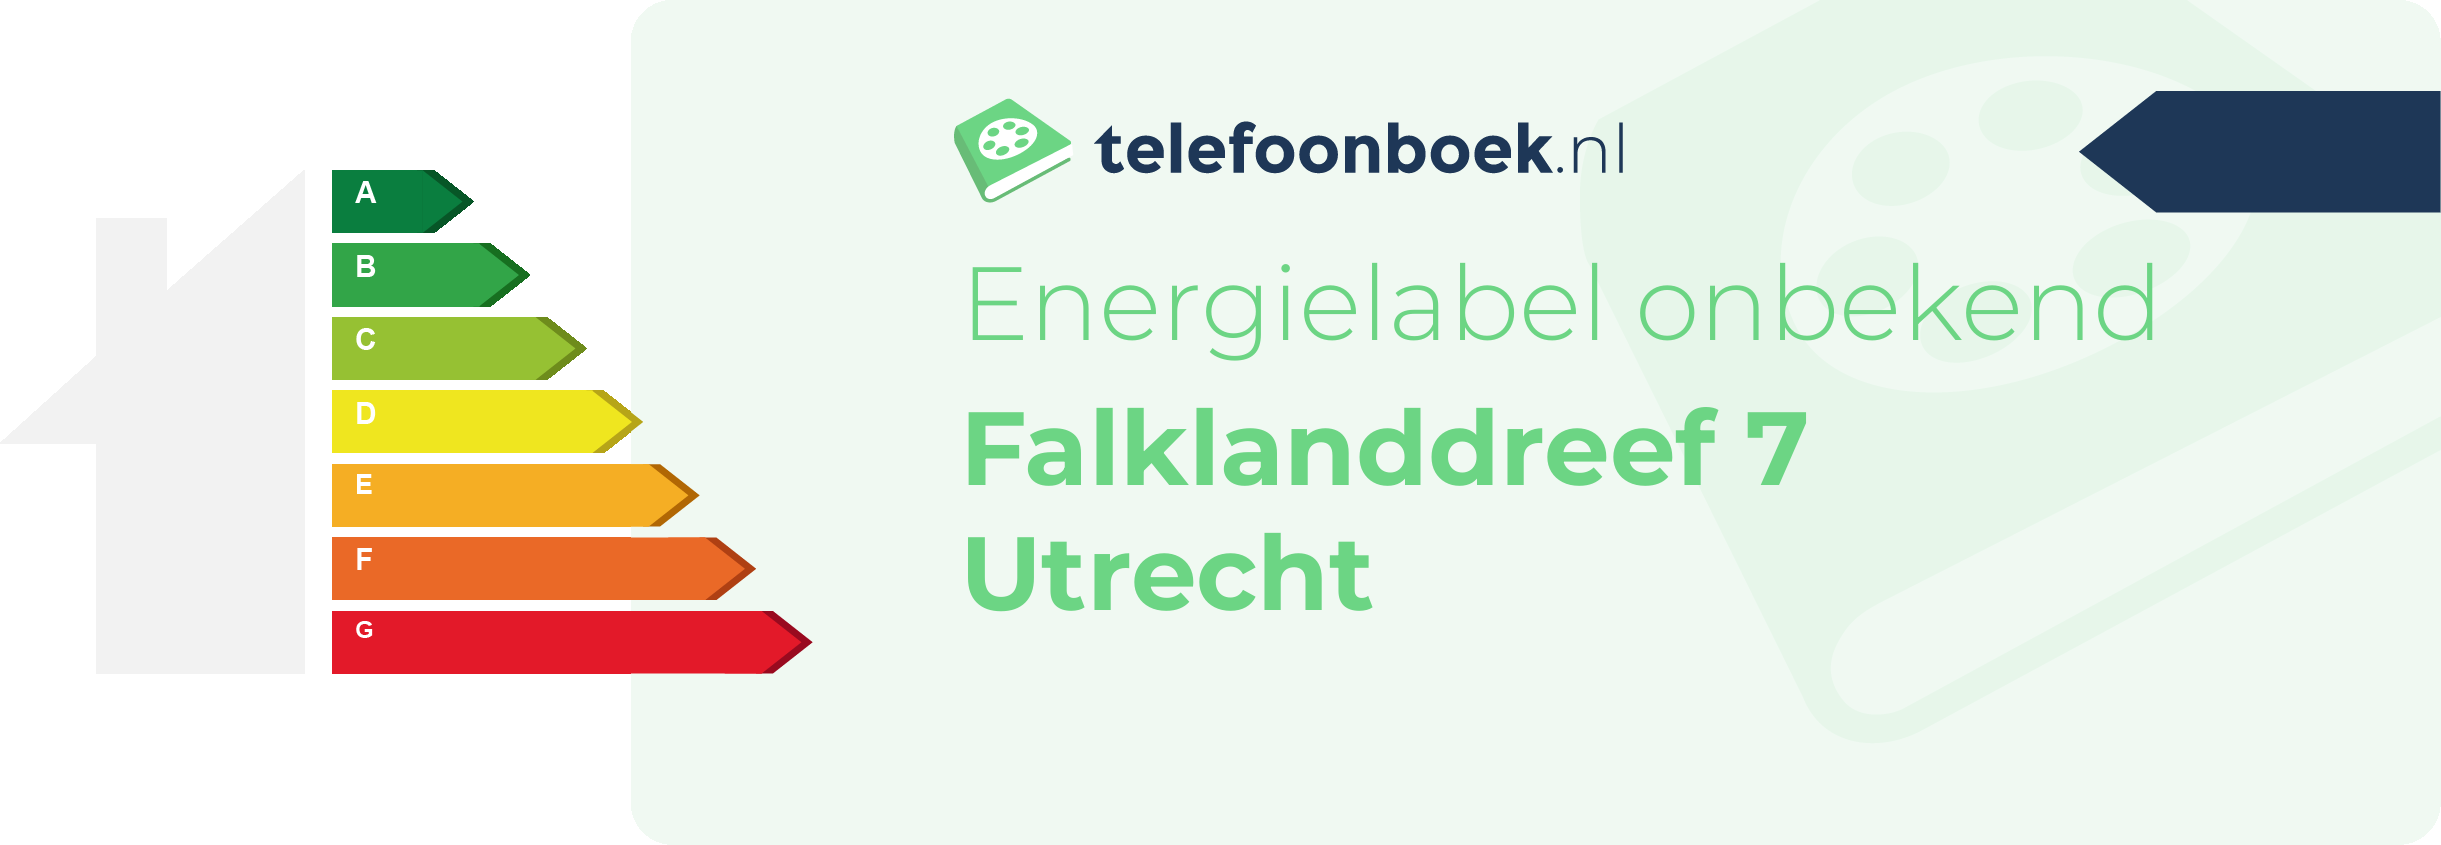 Energielabel Falklanddreef 7 Utrecht